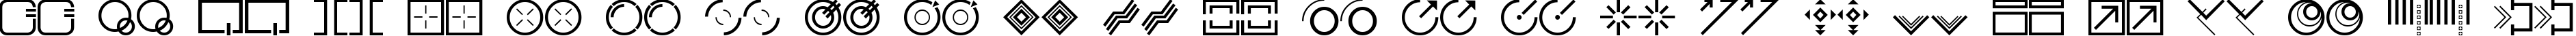 Пример написания английского алфавита шрифтом StyleBats CleanCut